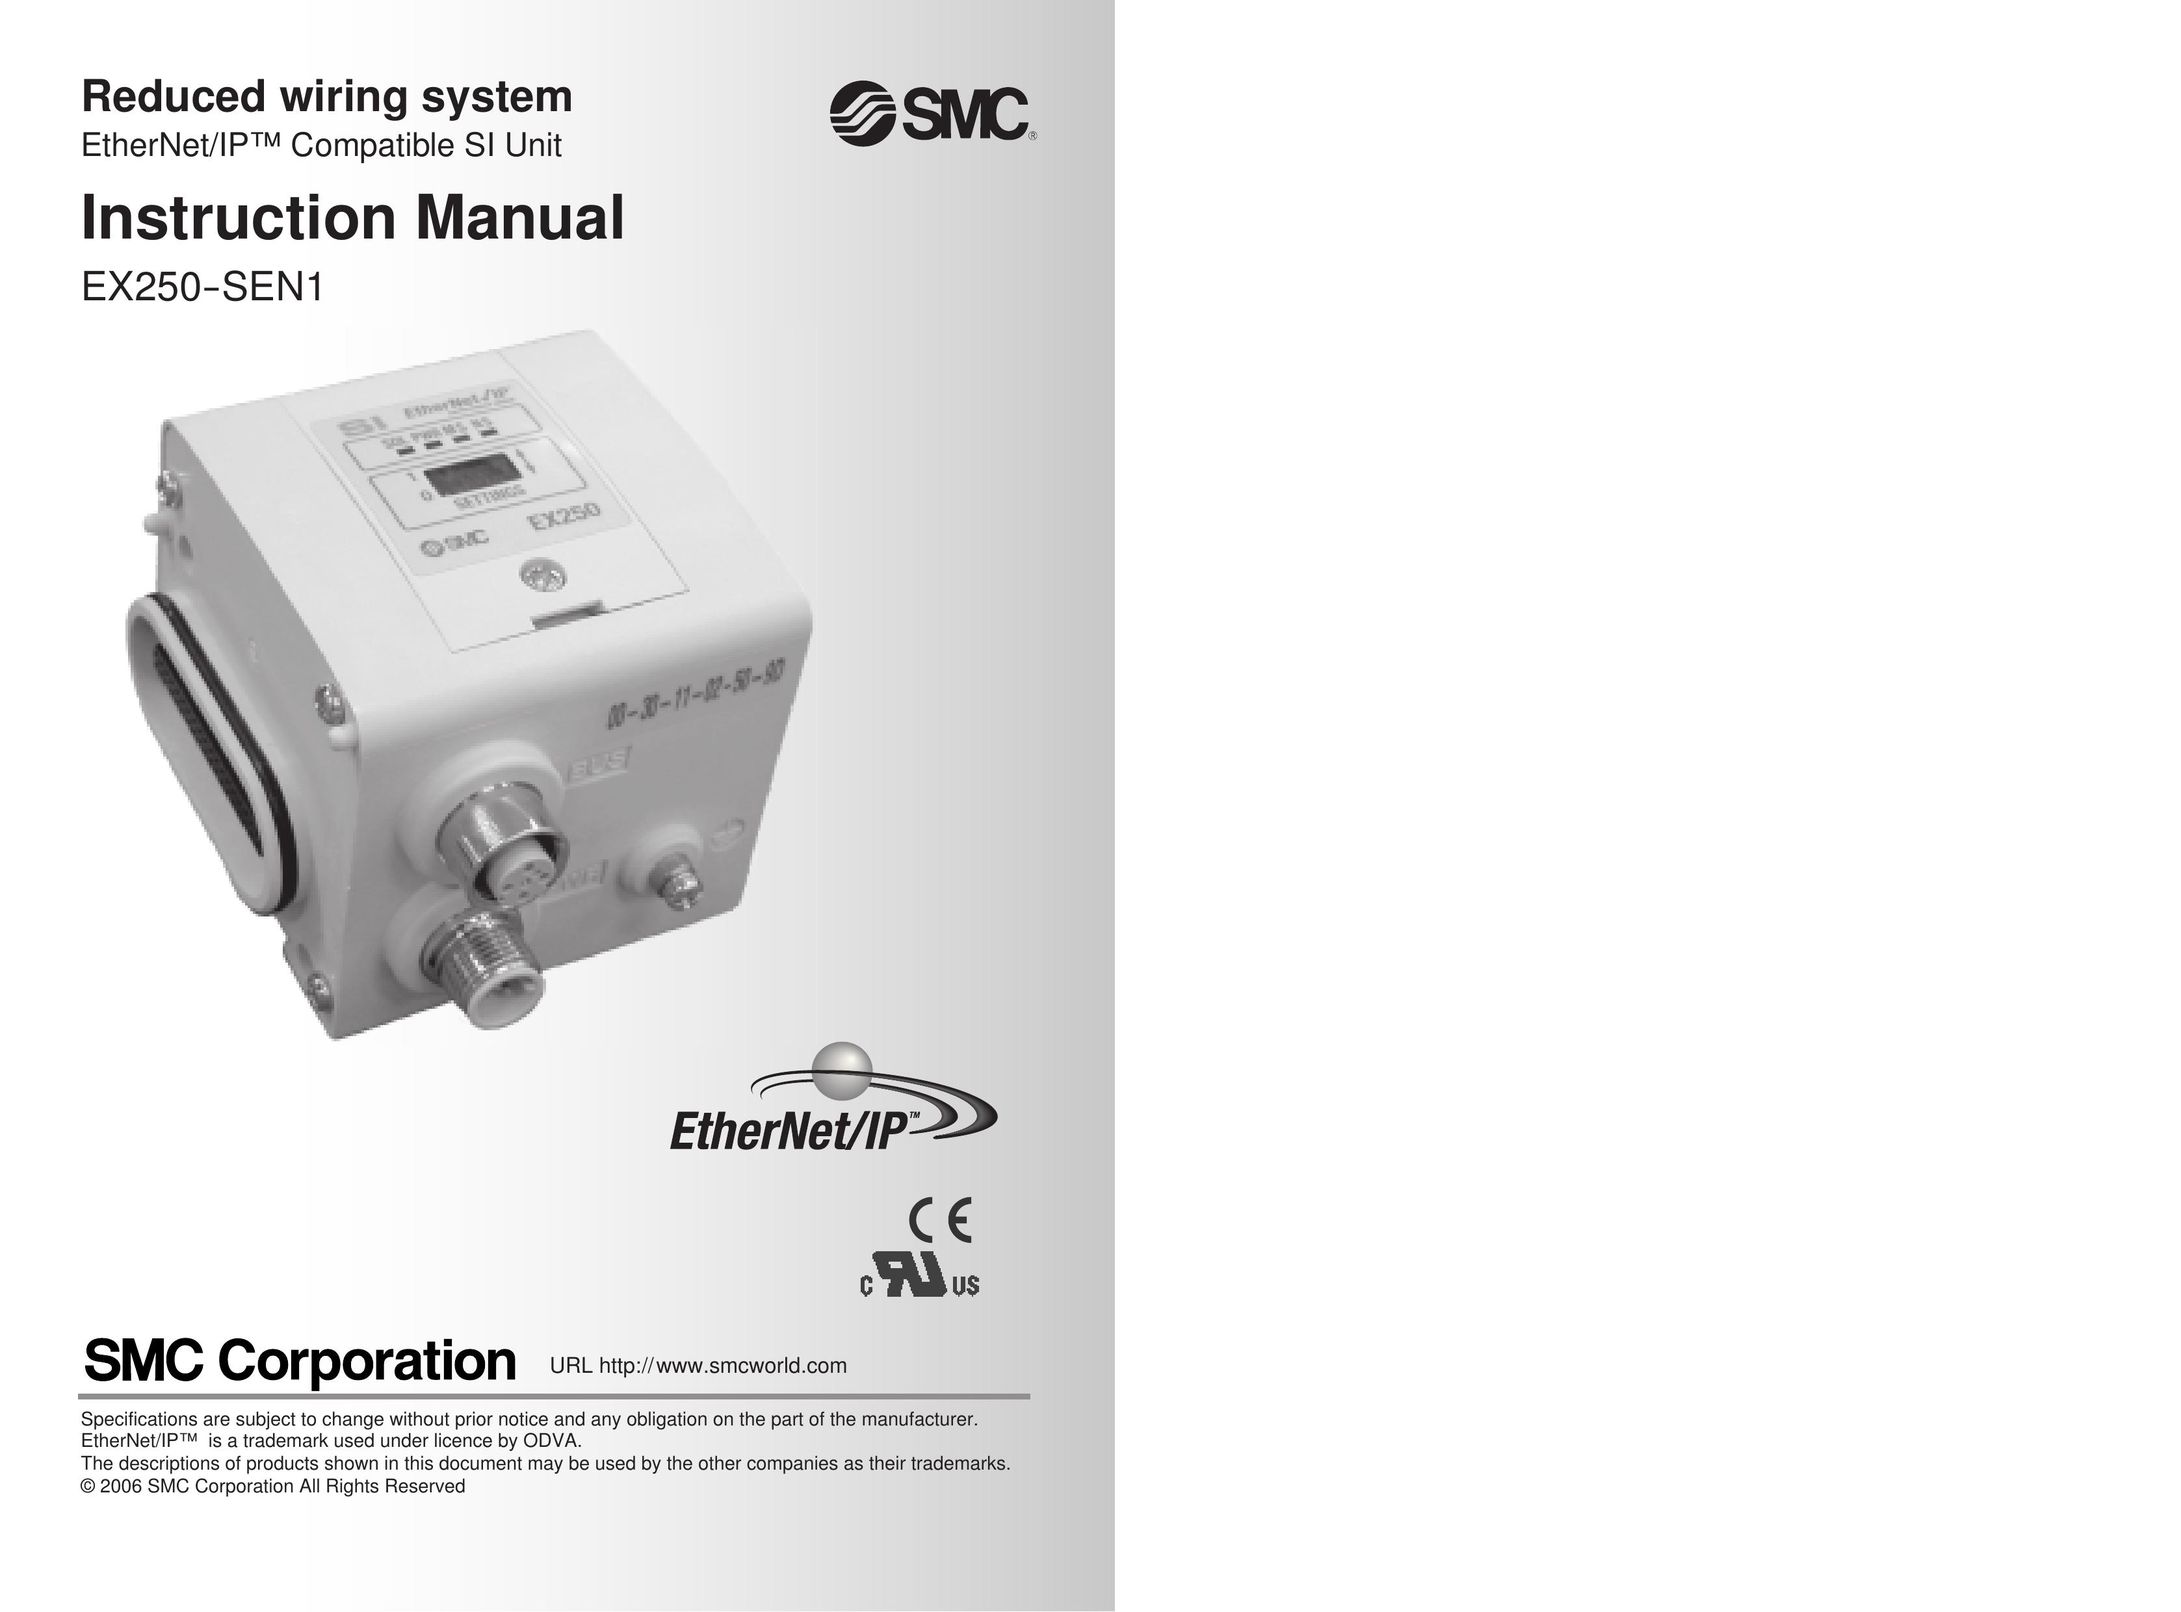 Sierra Monitor Corporation EX250-SEN1 Switch User Manual